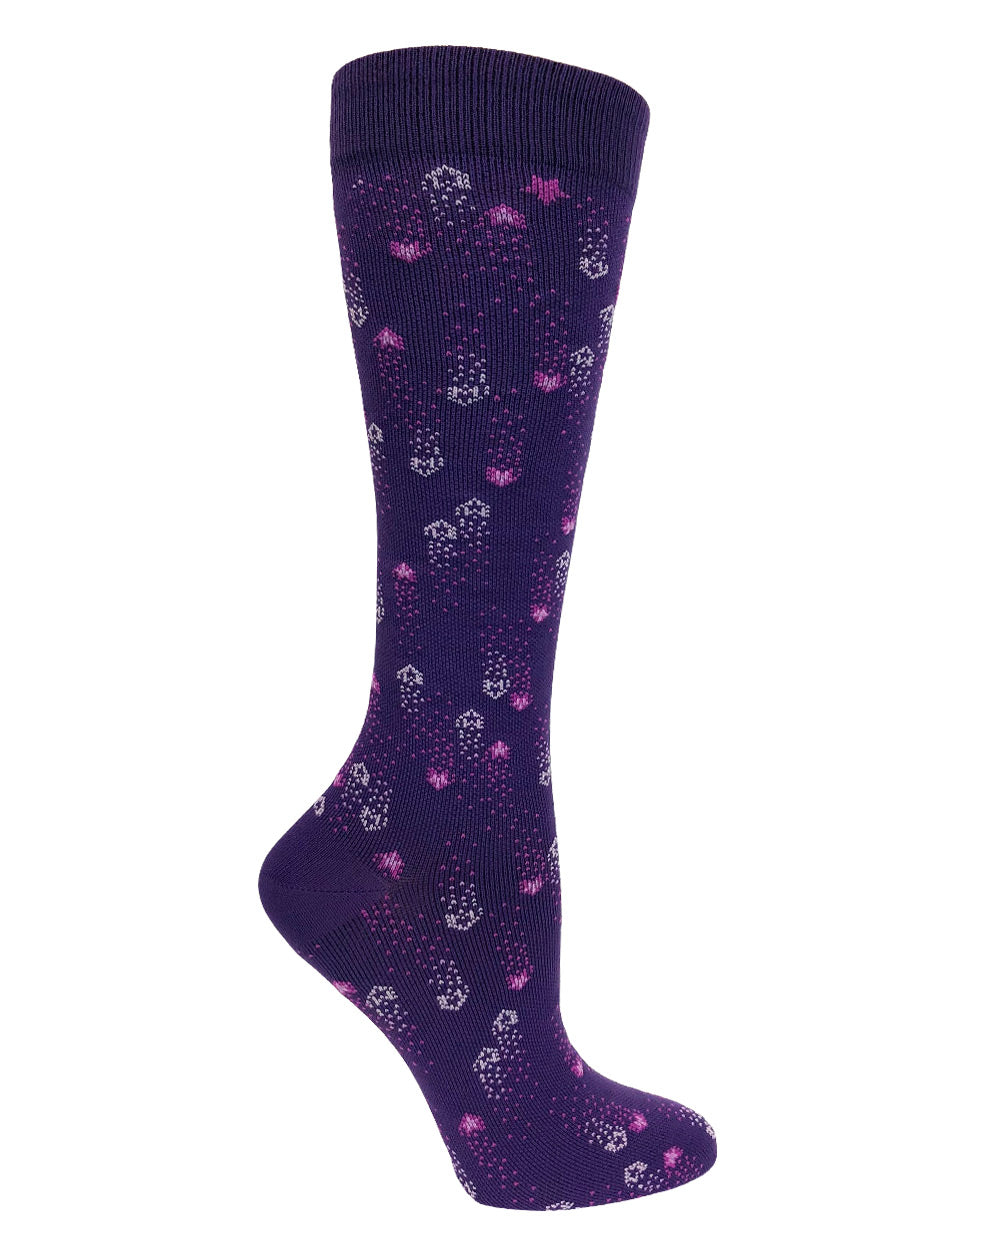 12" Premium Knit Compression Socks - Shooting Stars Purple